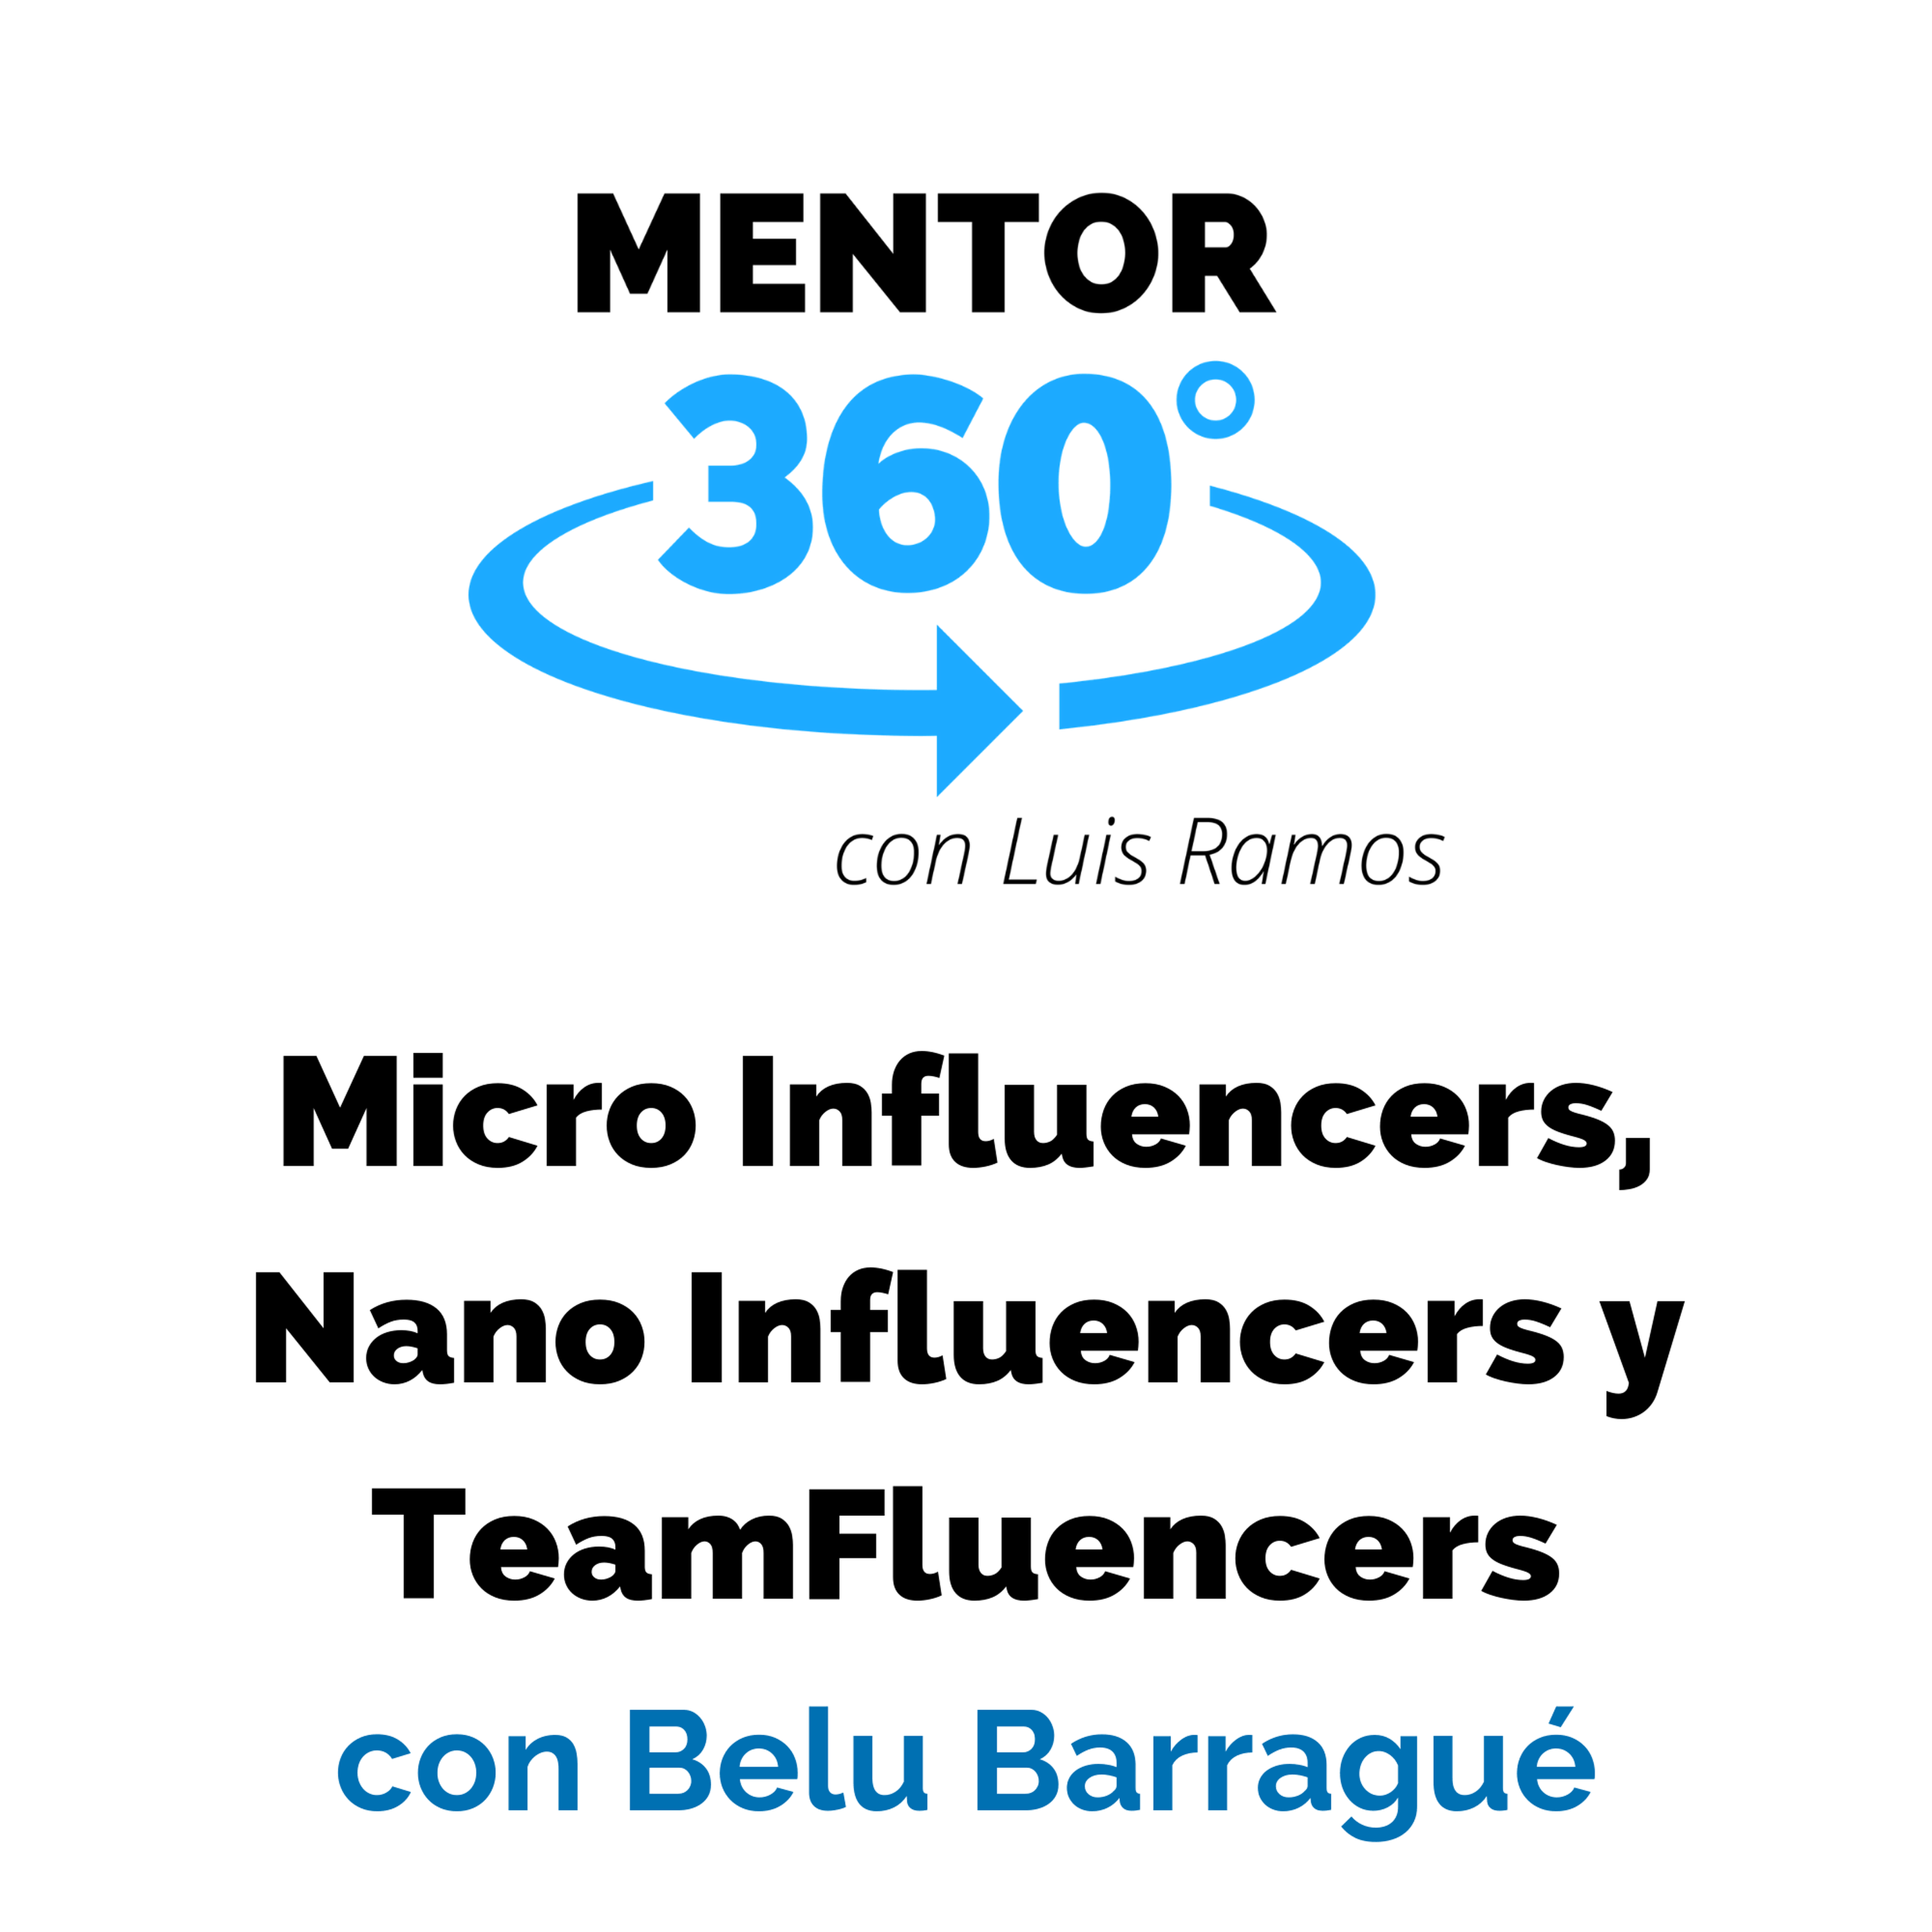 Micro Influencers, Nano Influencers y TeamFluencers, con Belu Barragué - Redes Sociales - MENTOR360